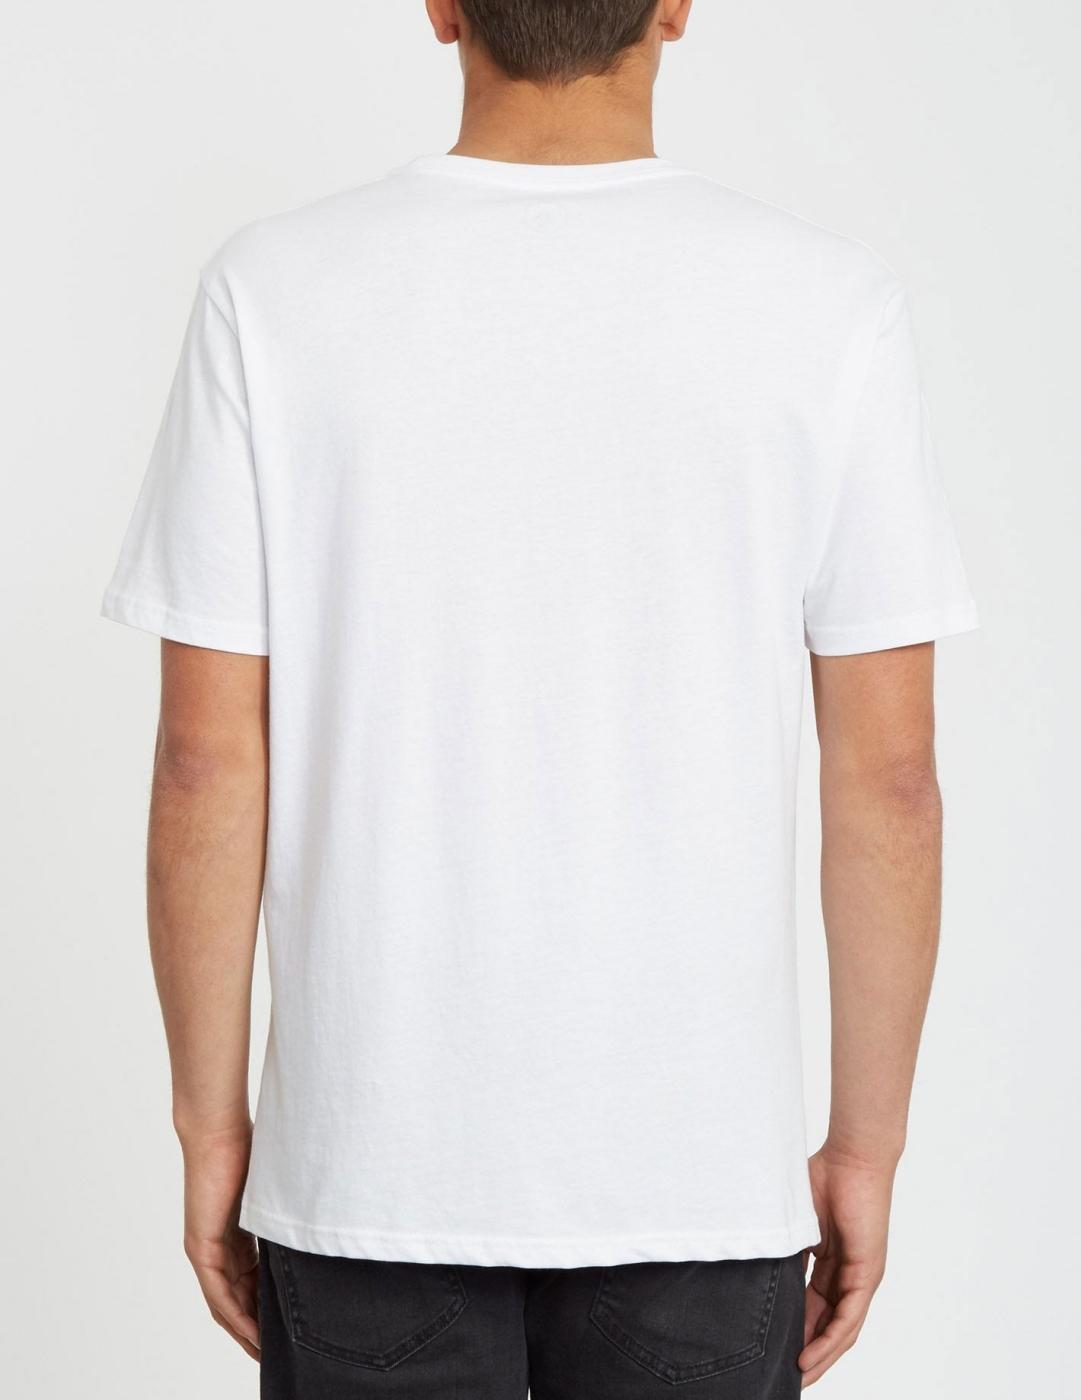 Camiseta VOLCOM STONE BLANKS - White